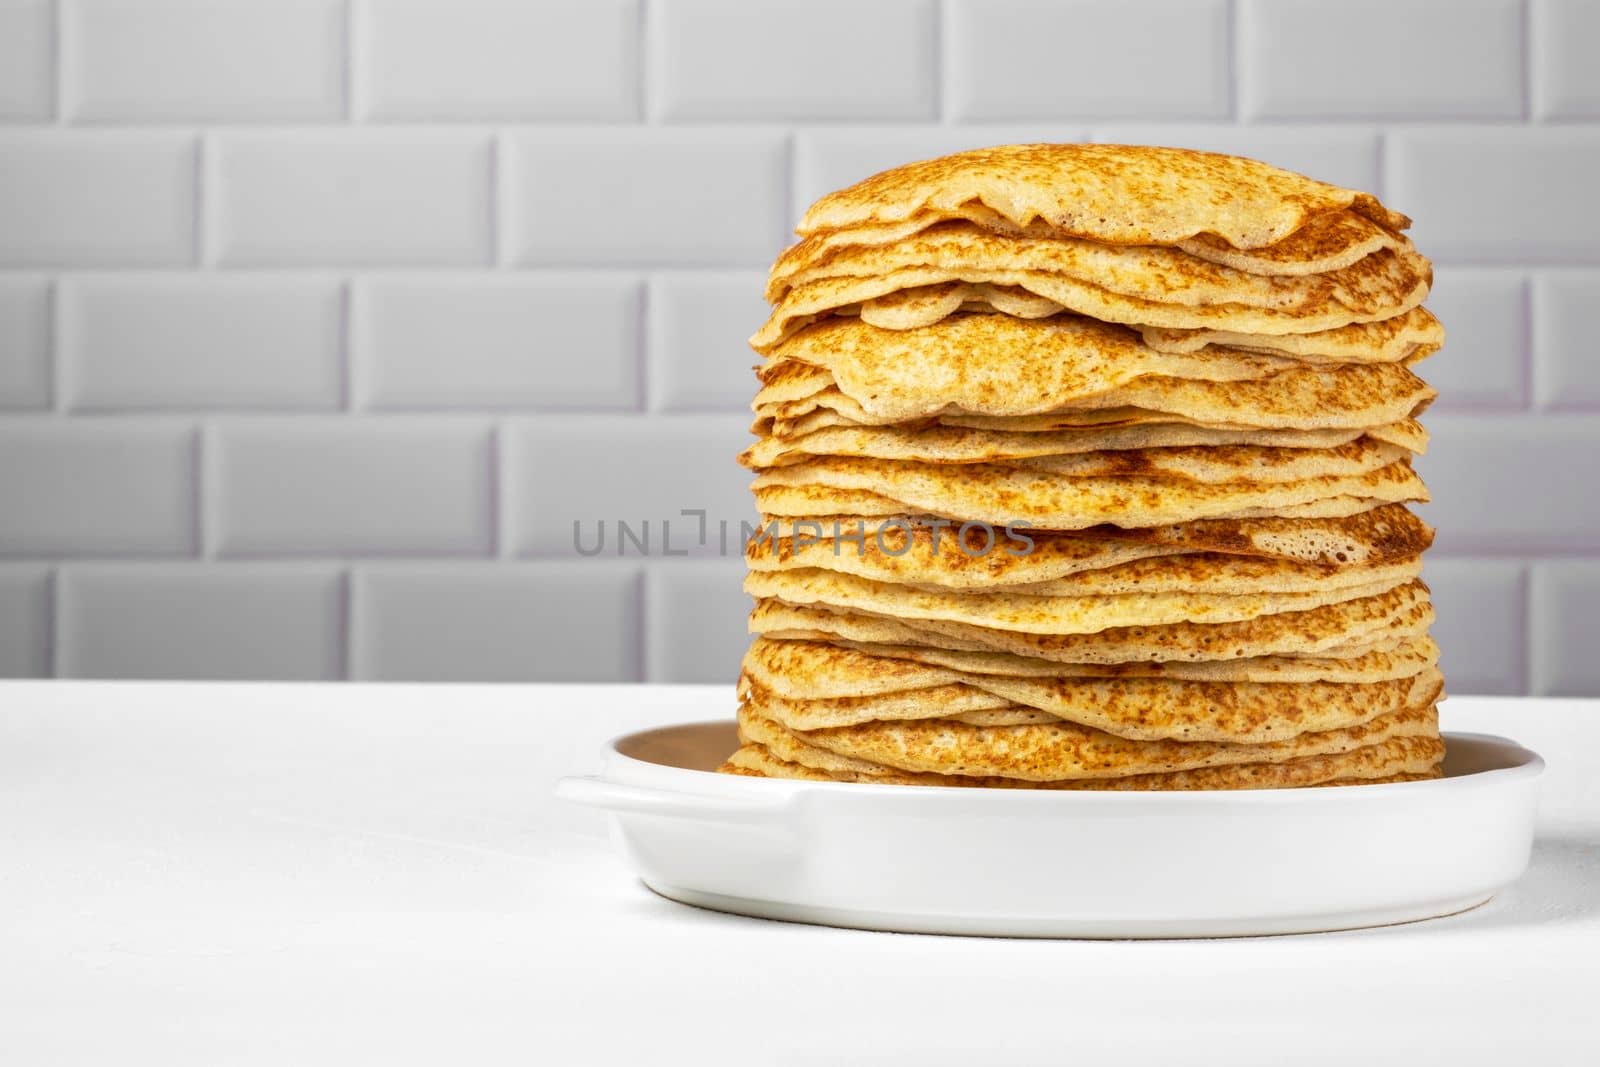 Stack of freshly baked pancakes lie in white ceramic form. Pancake week. Russian kitchen. Selective focus.